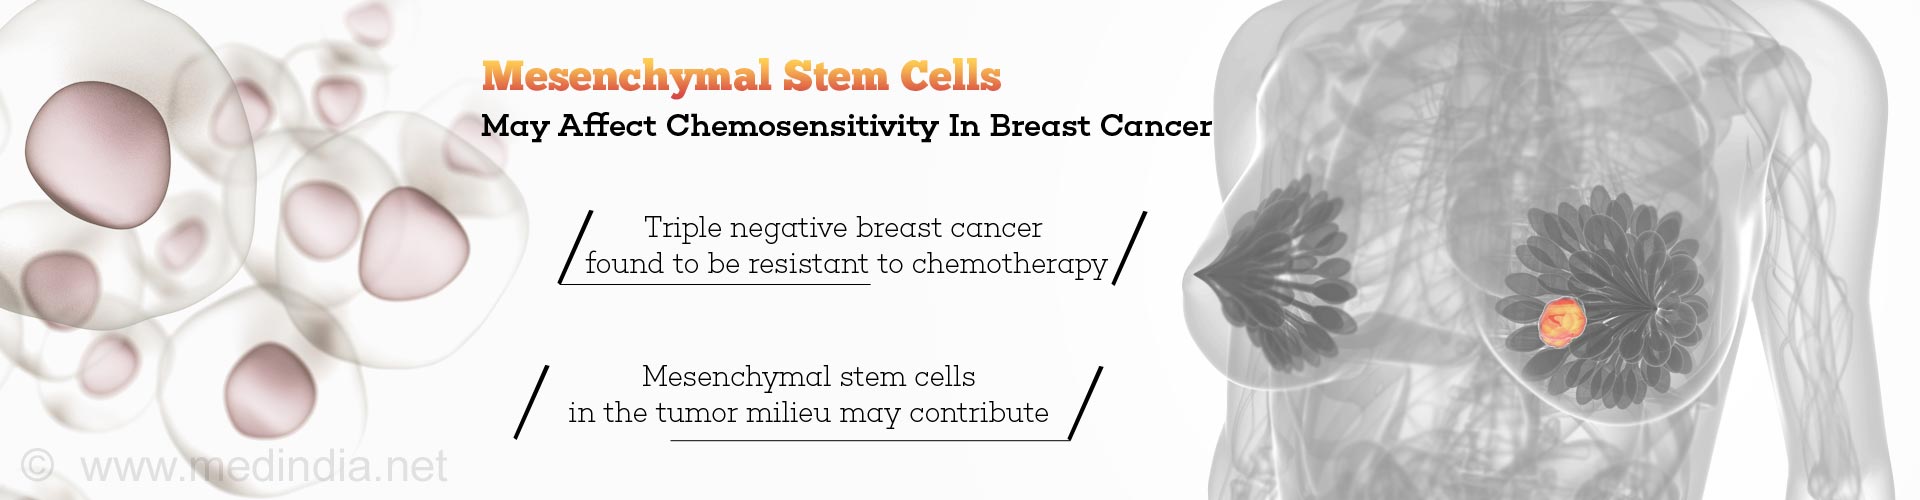 Chemo-resistance in Triple Negative Breast Cancer Linked To Mesenchymal Stem Cells In Tumor